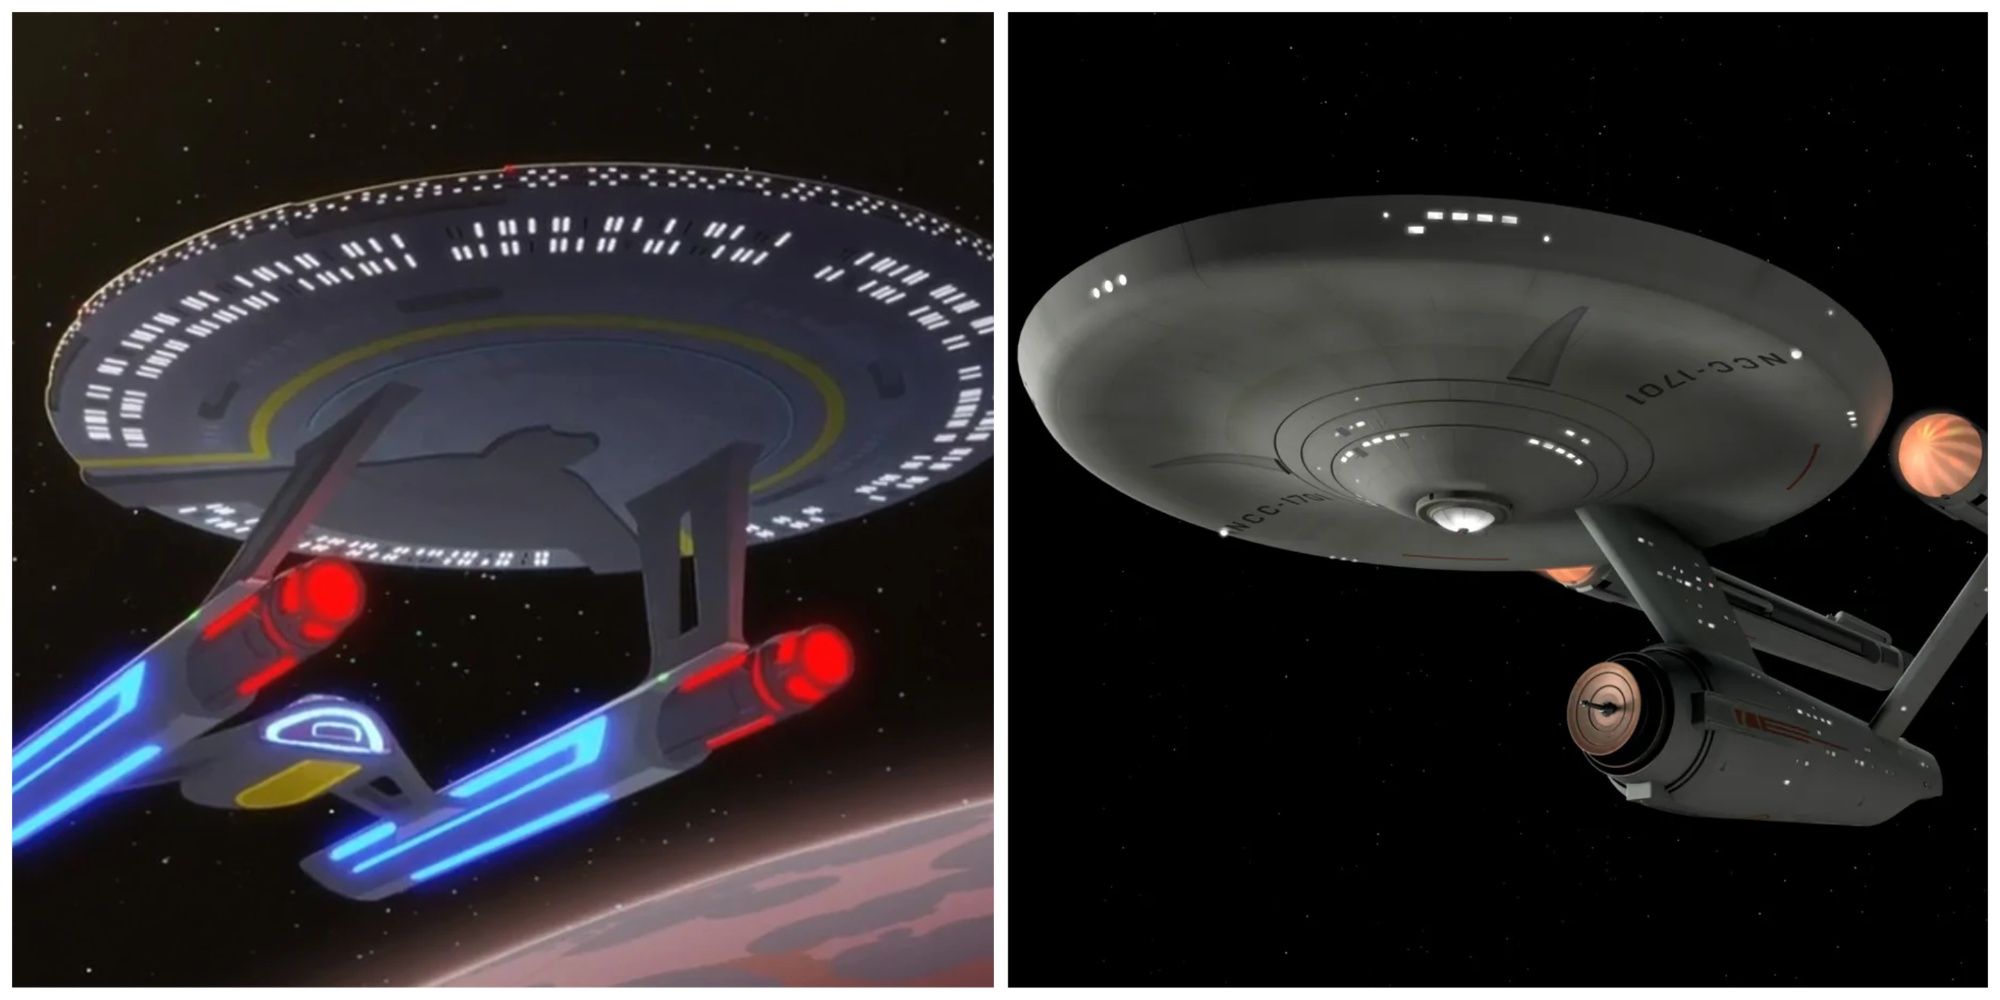 Split image showing the USS Enterprise and the USS Cerritos.